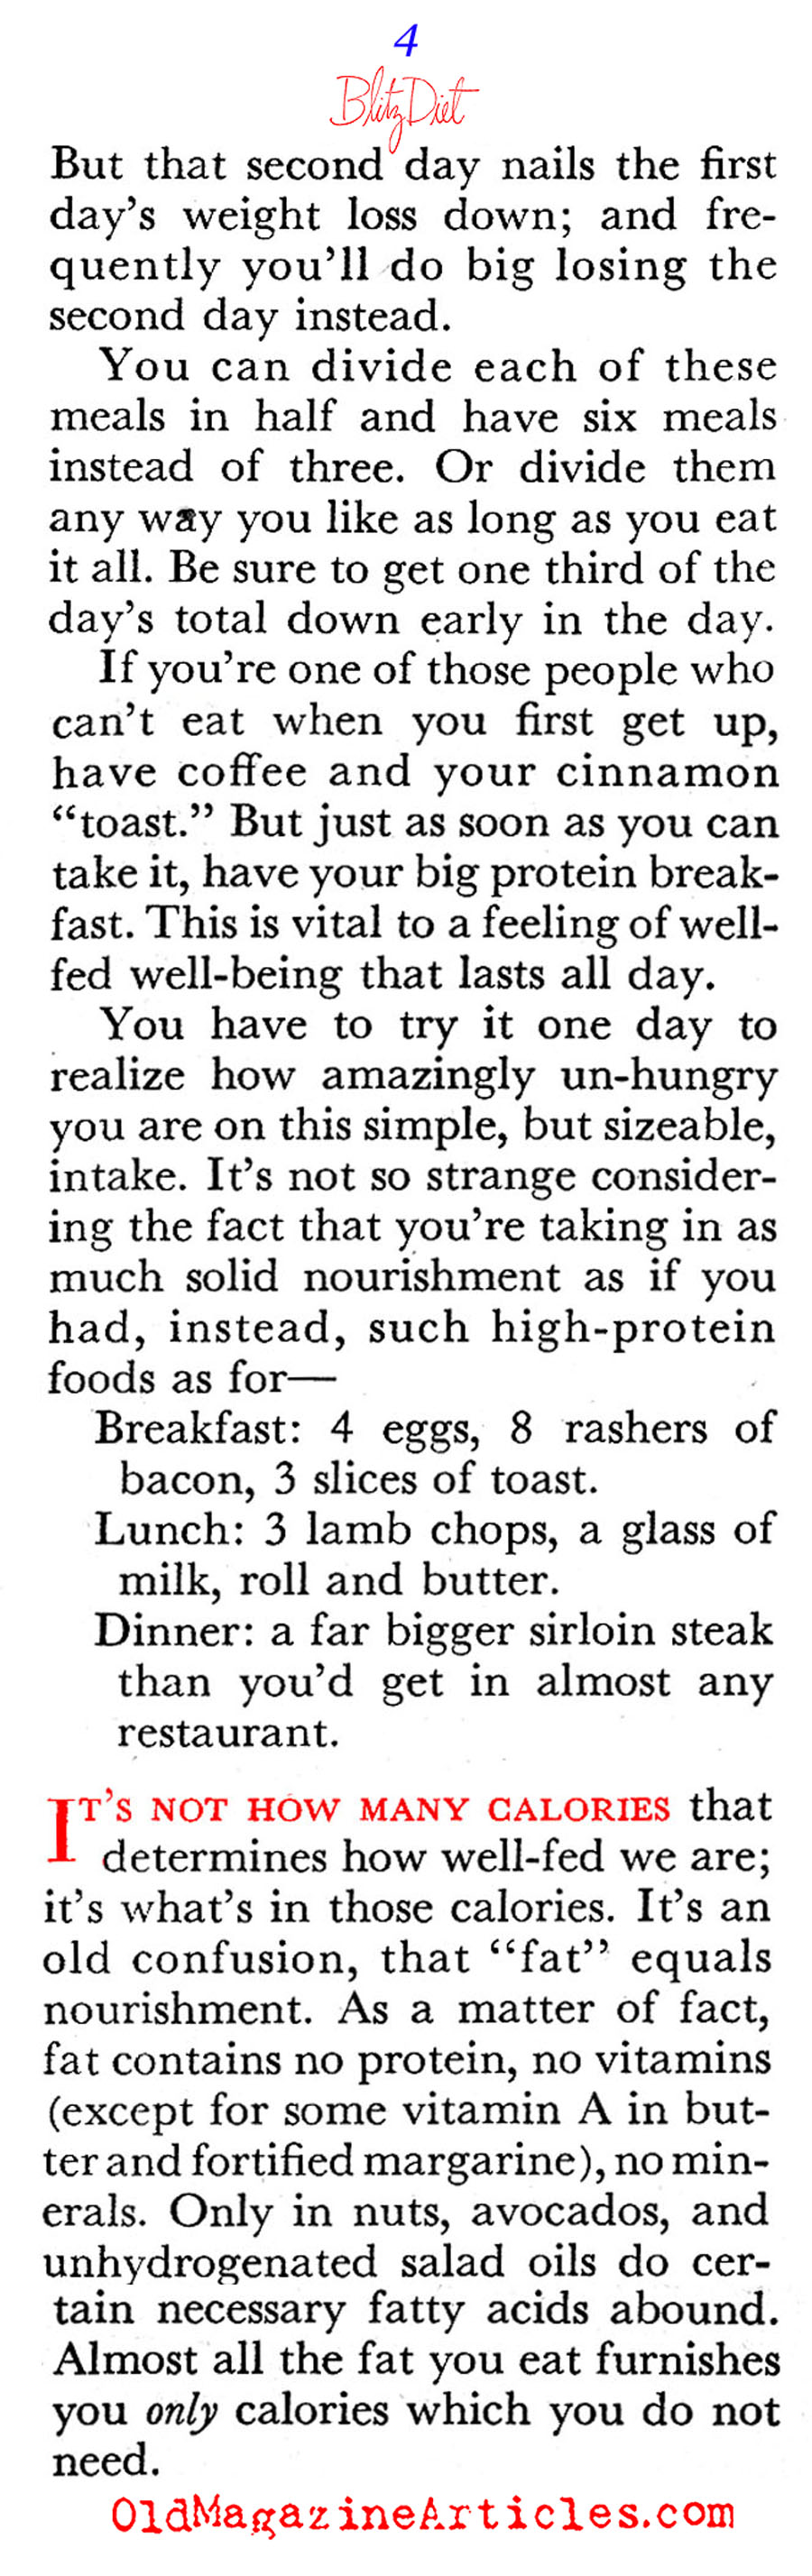 The Blitz Diet of 1956